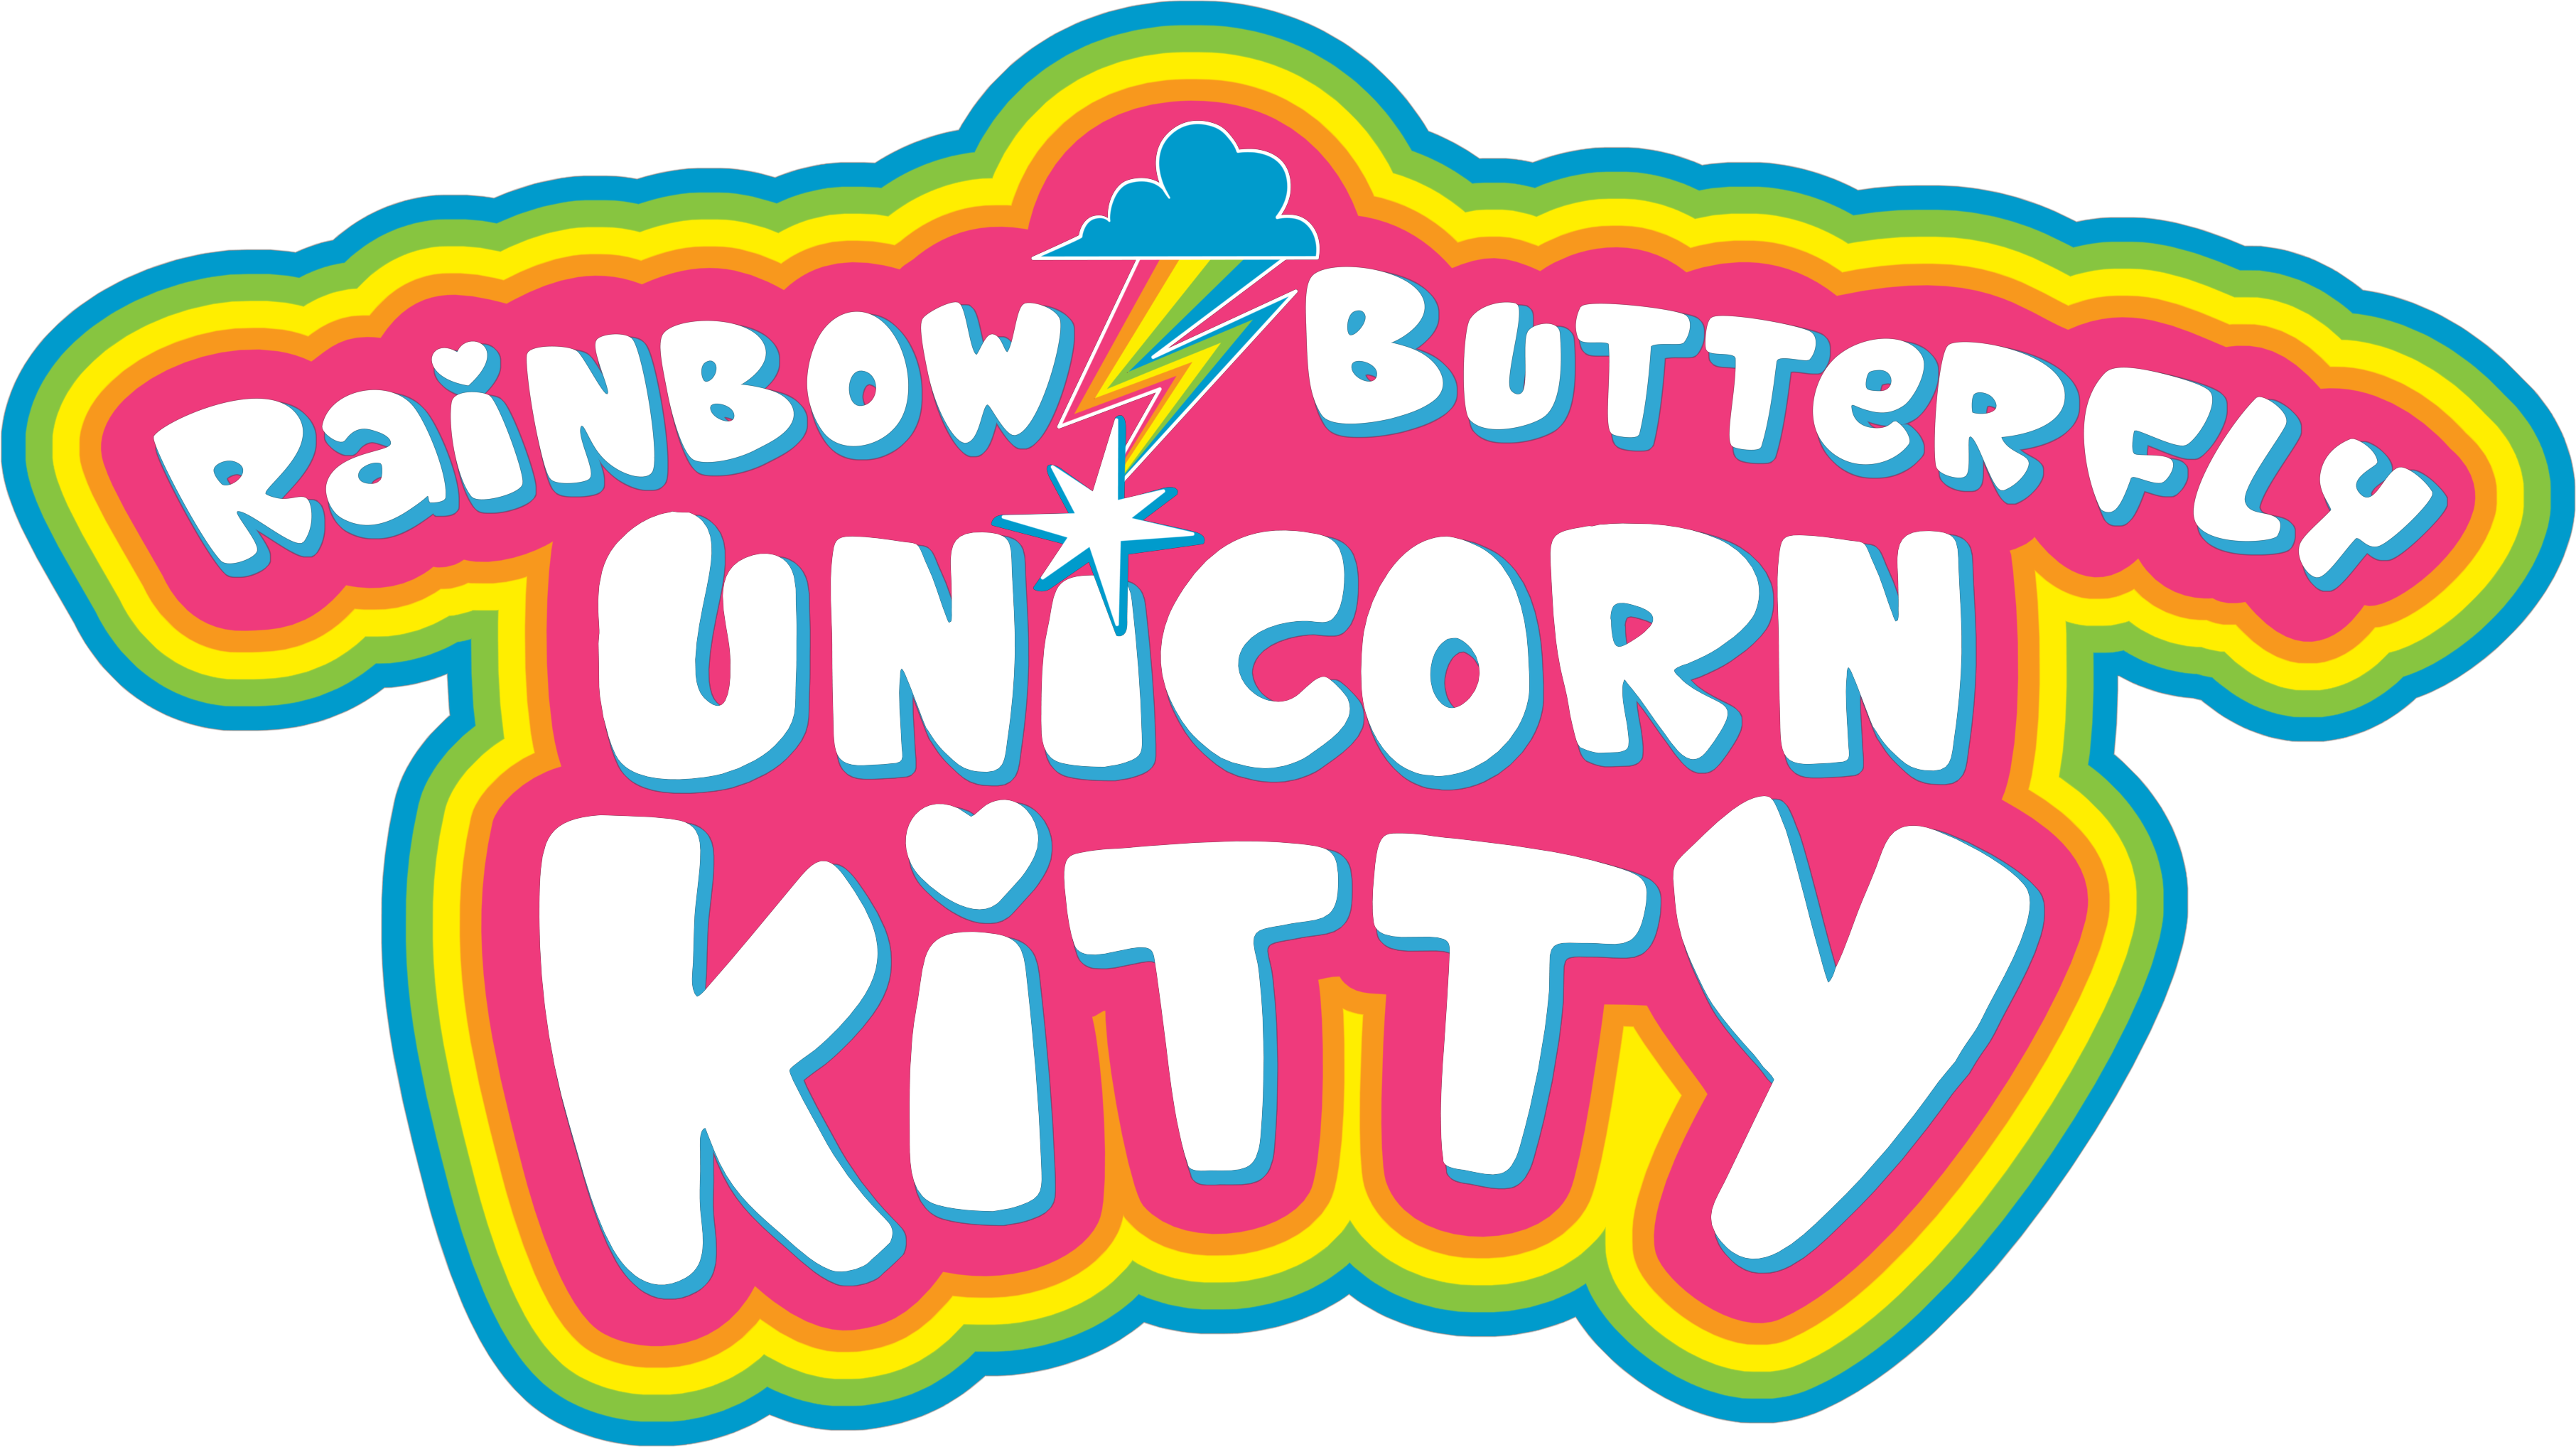 Download Rainbow Butterfly Unicorn Kitty | International ...